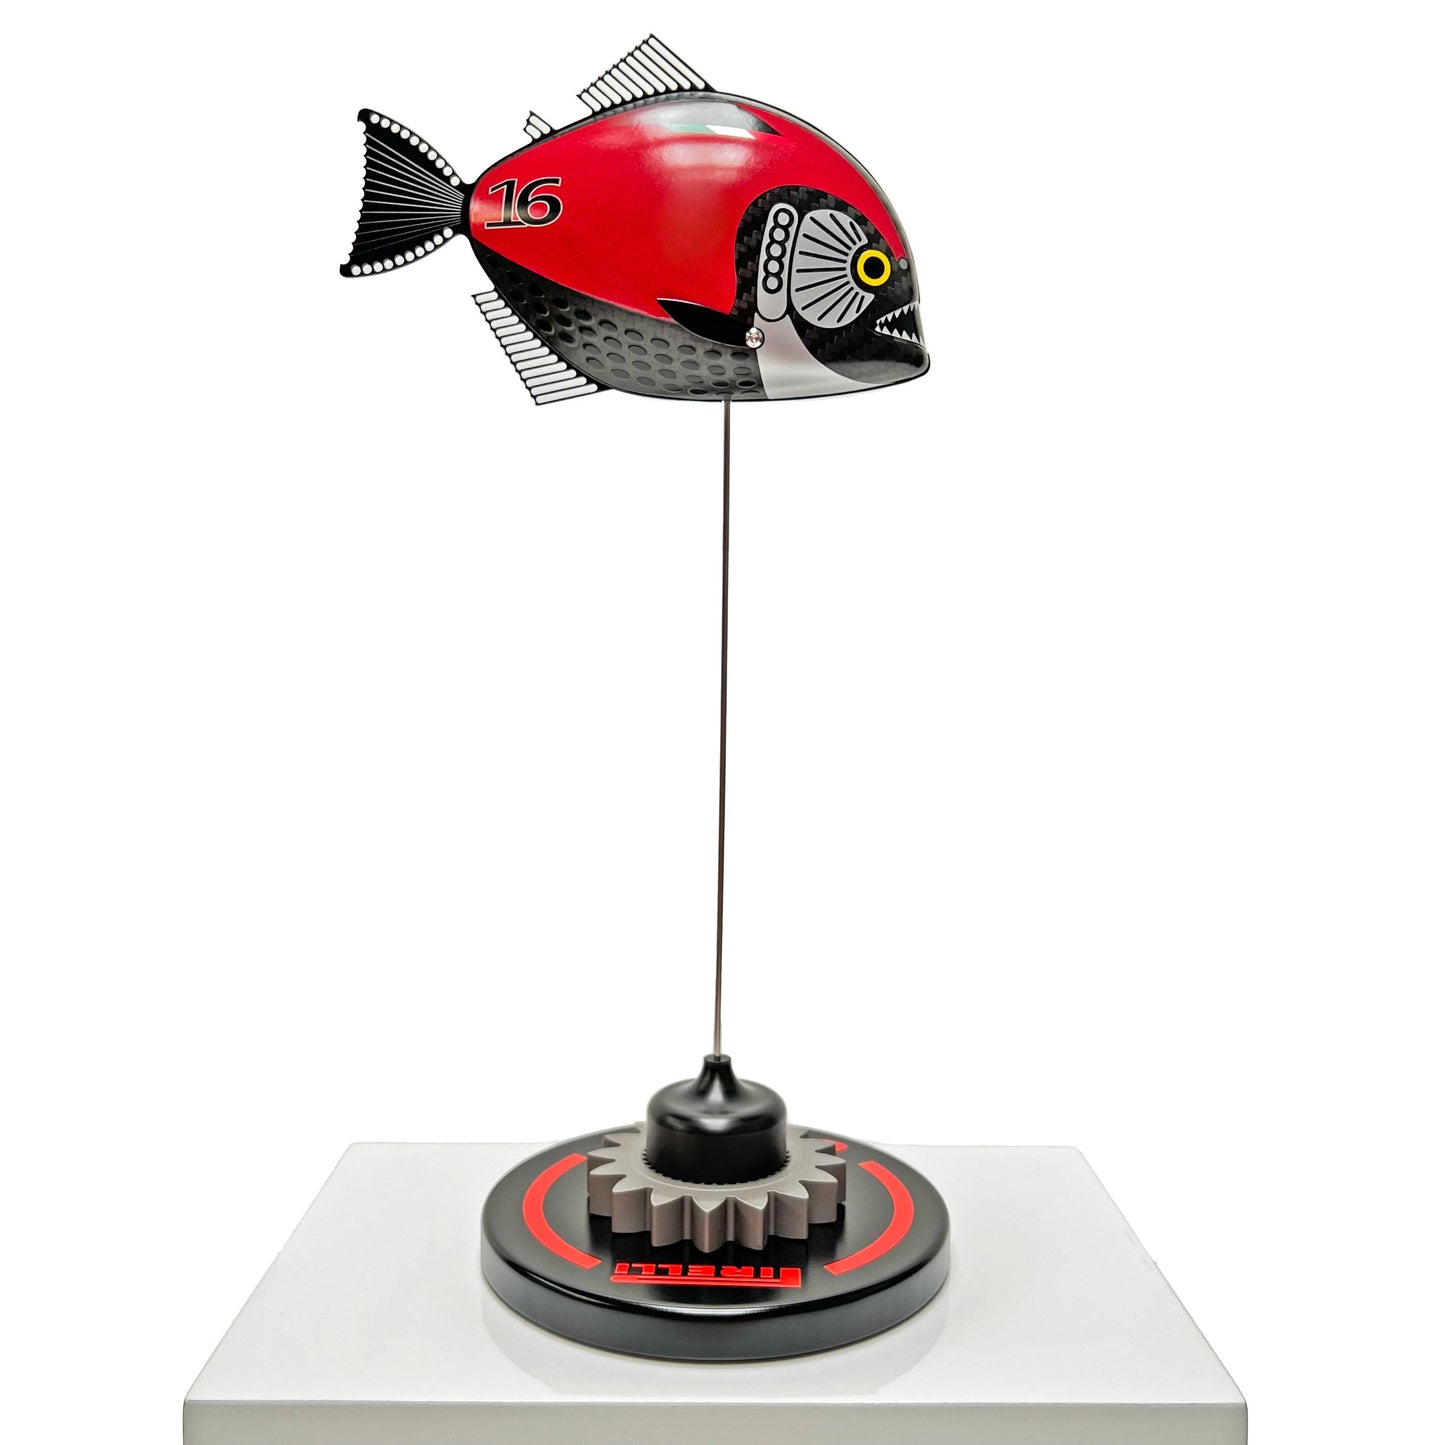 Carbon fibre Piranha fish with Ferrari F1 livery on a black base with F1 gear